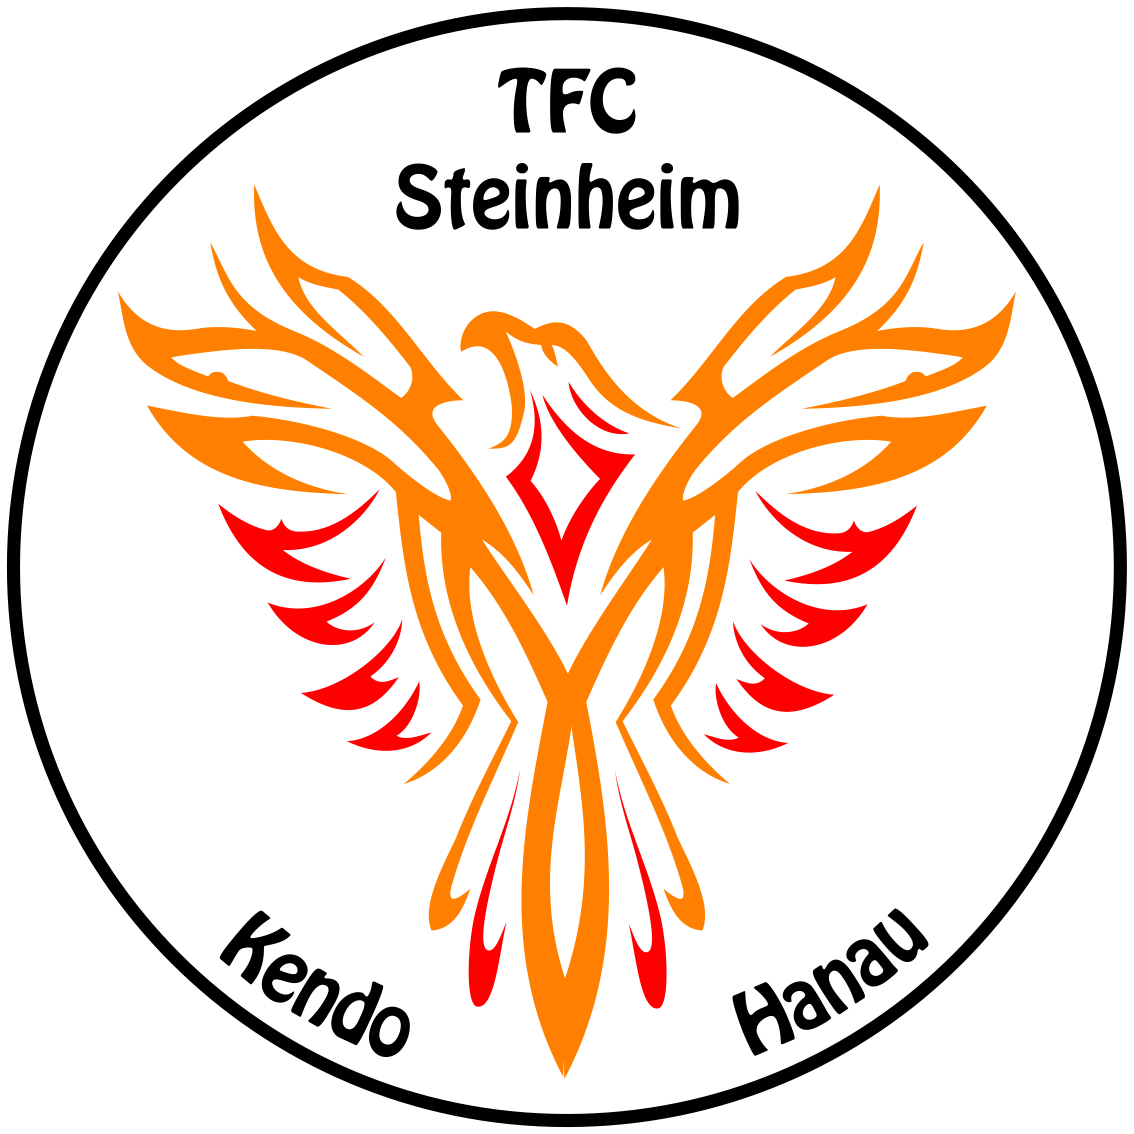 (TFC Steinheim)